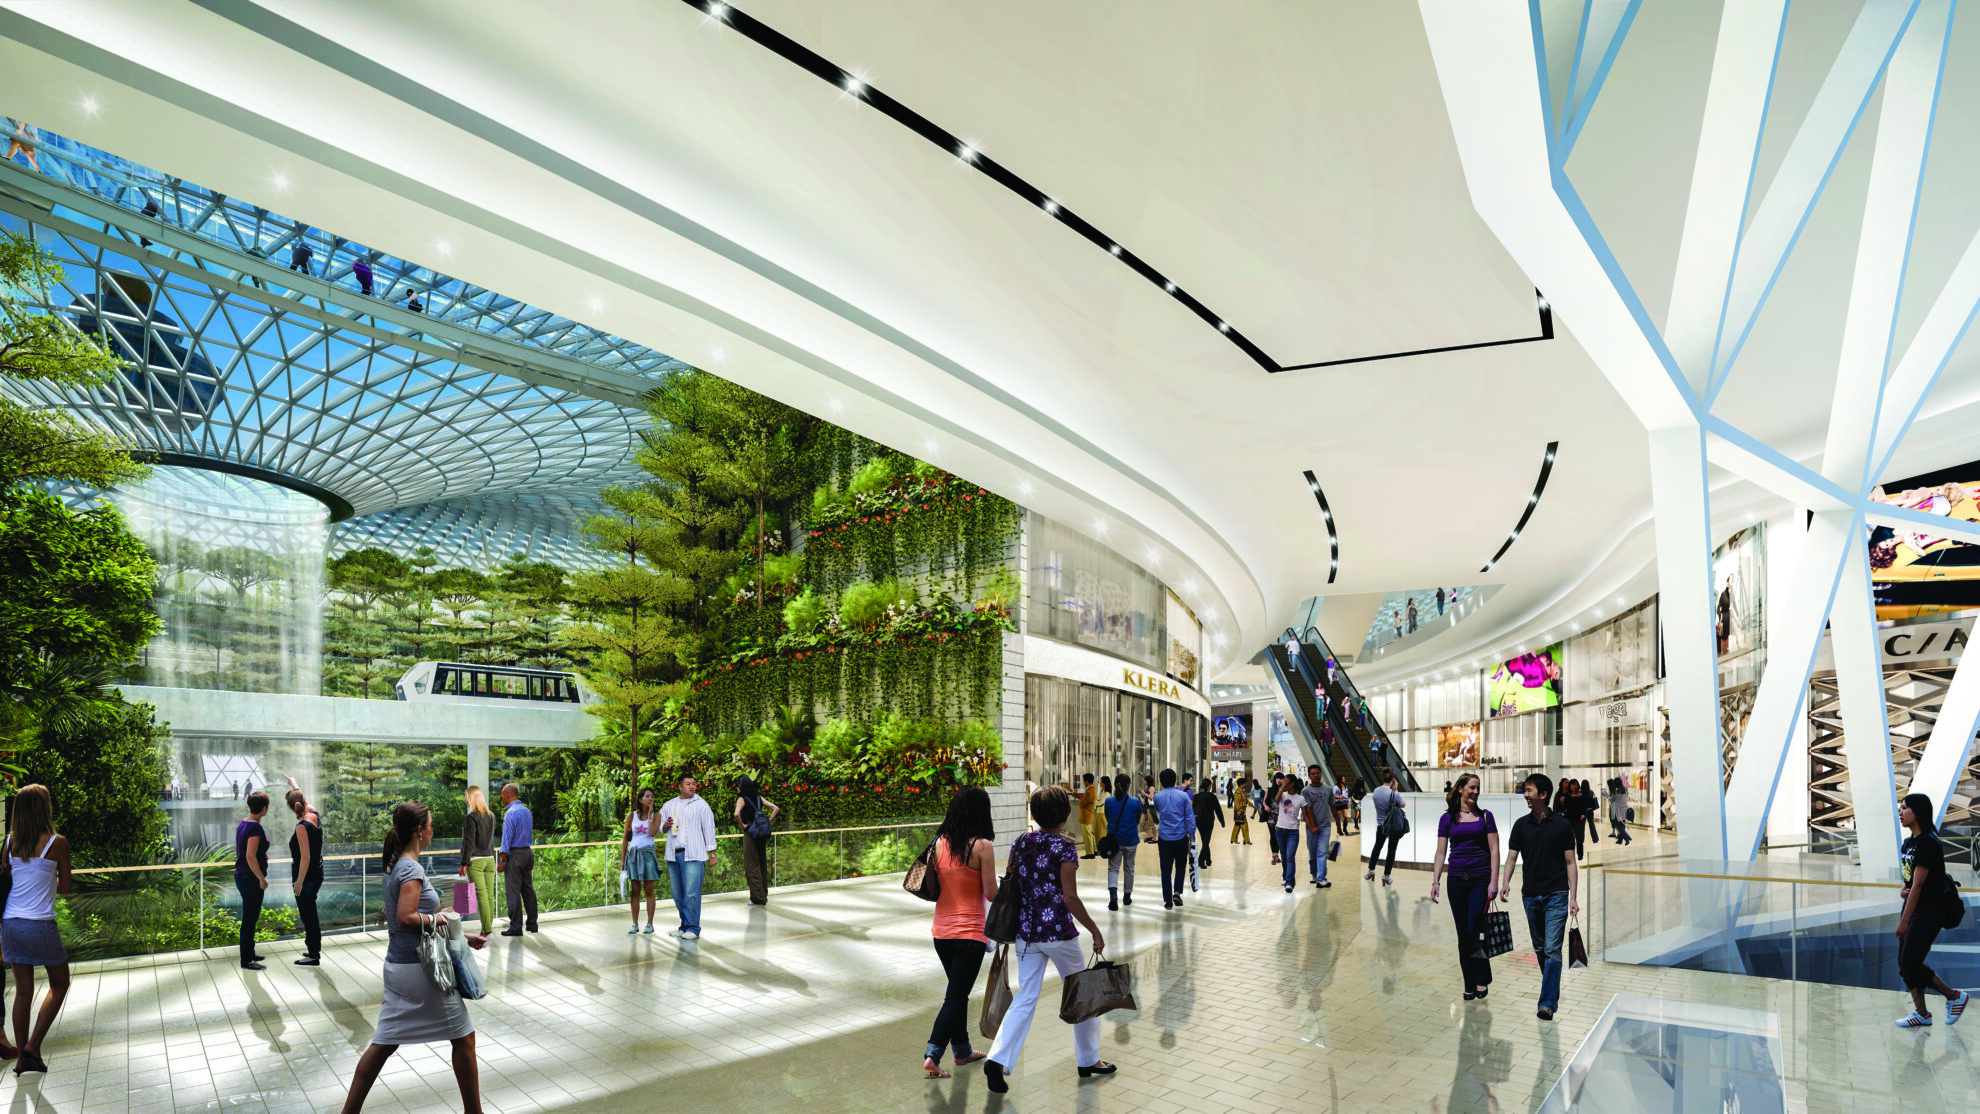 Singapore Changi airport's proposed Jewel terminal extension